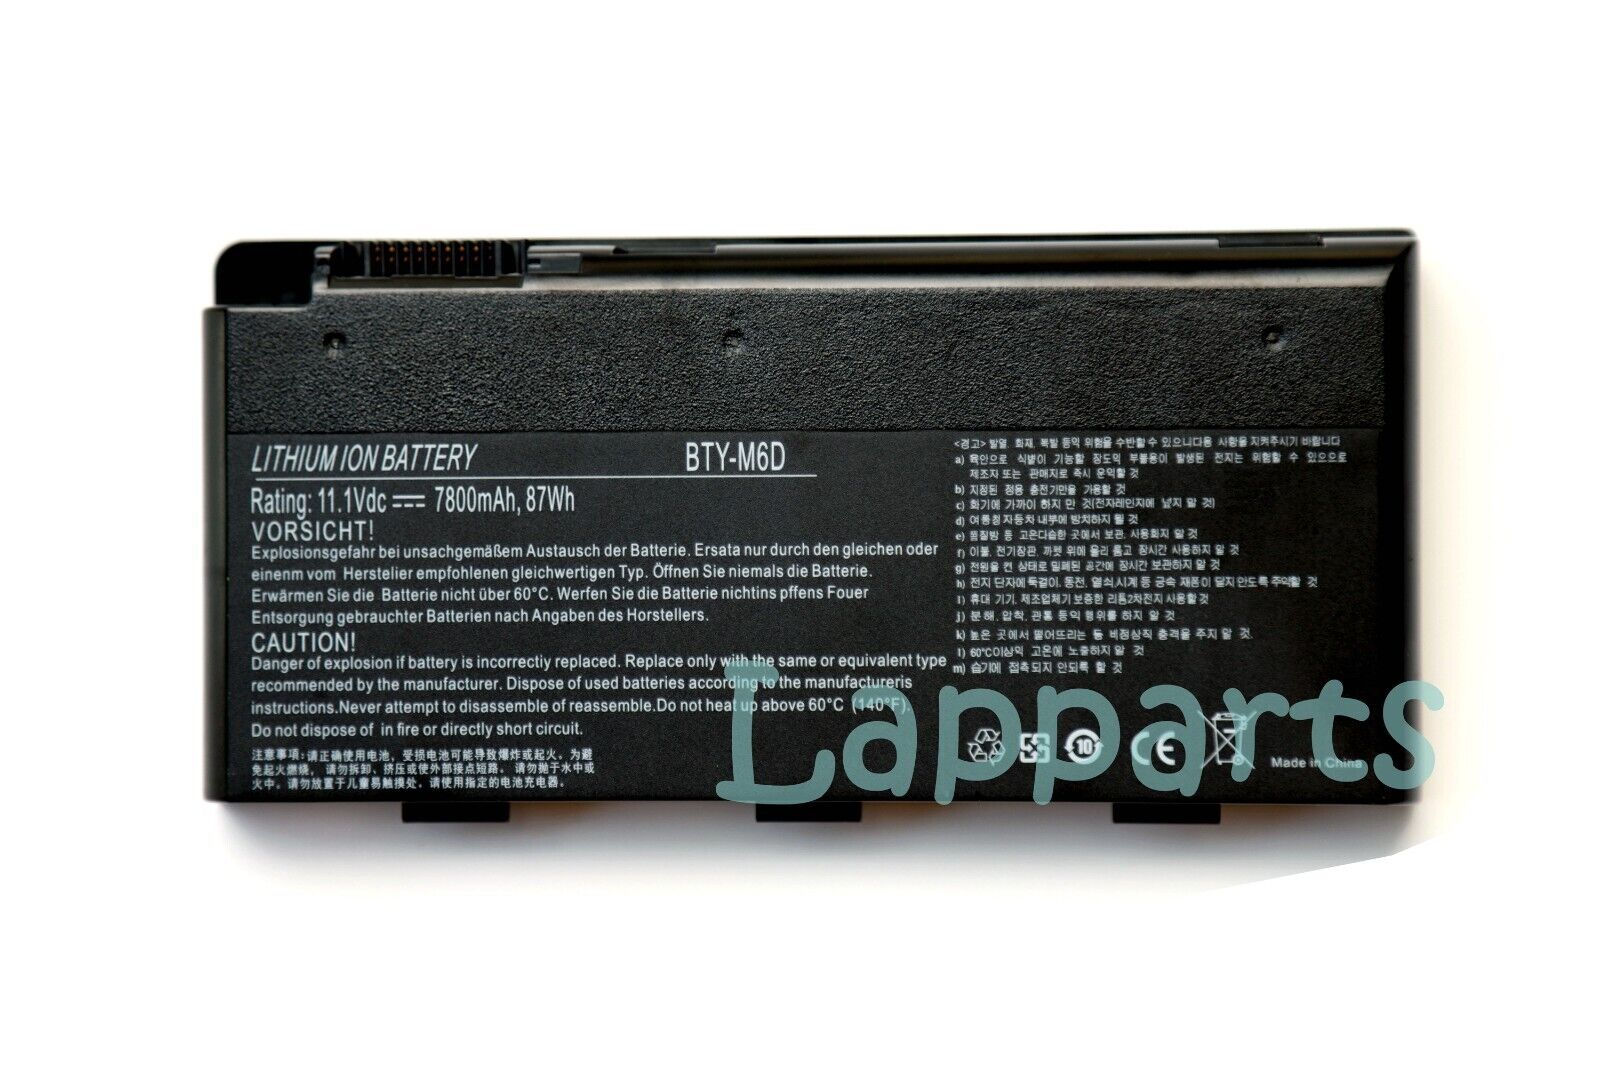 BTY-M6D Genuine Battery for MSI GT60 GX60 GT70 GT660 GX660 GT680 GX680 GT780 